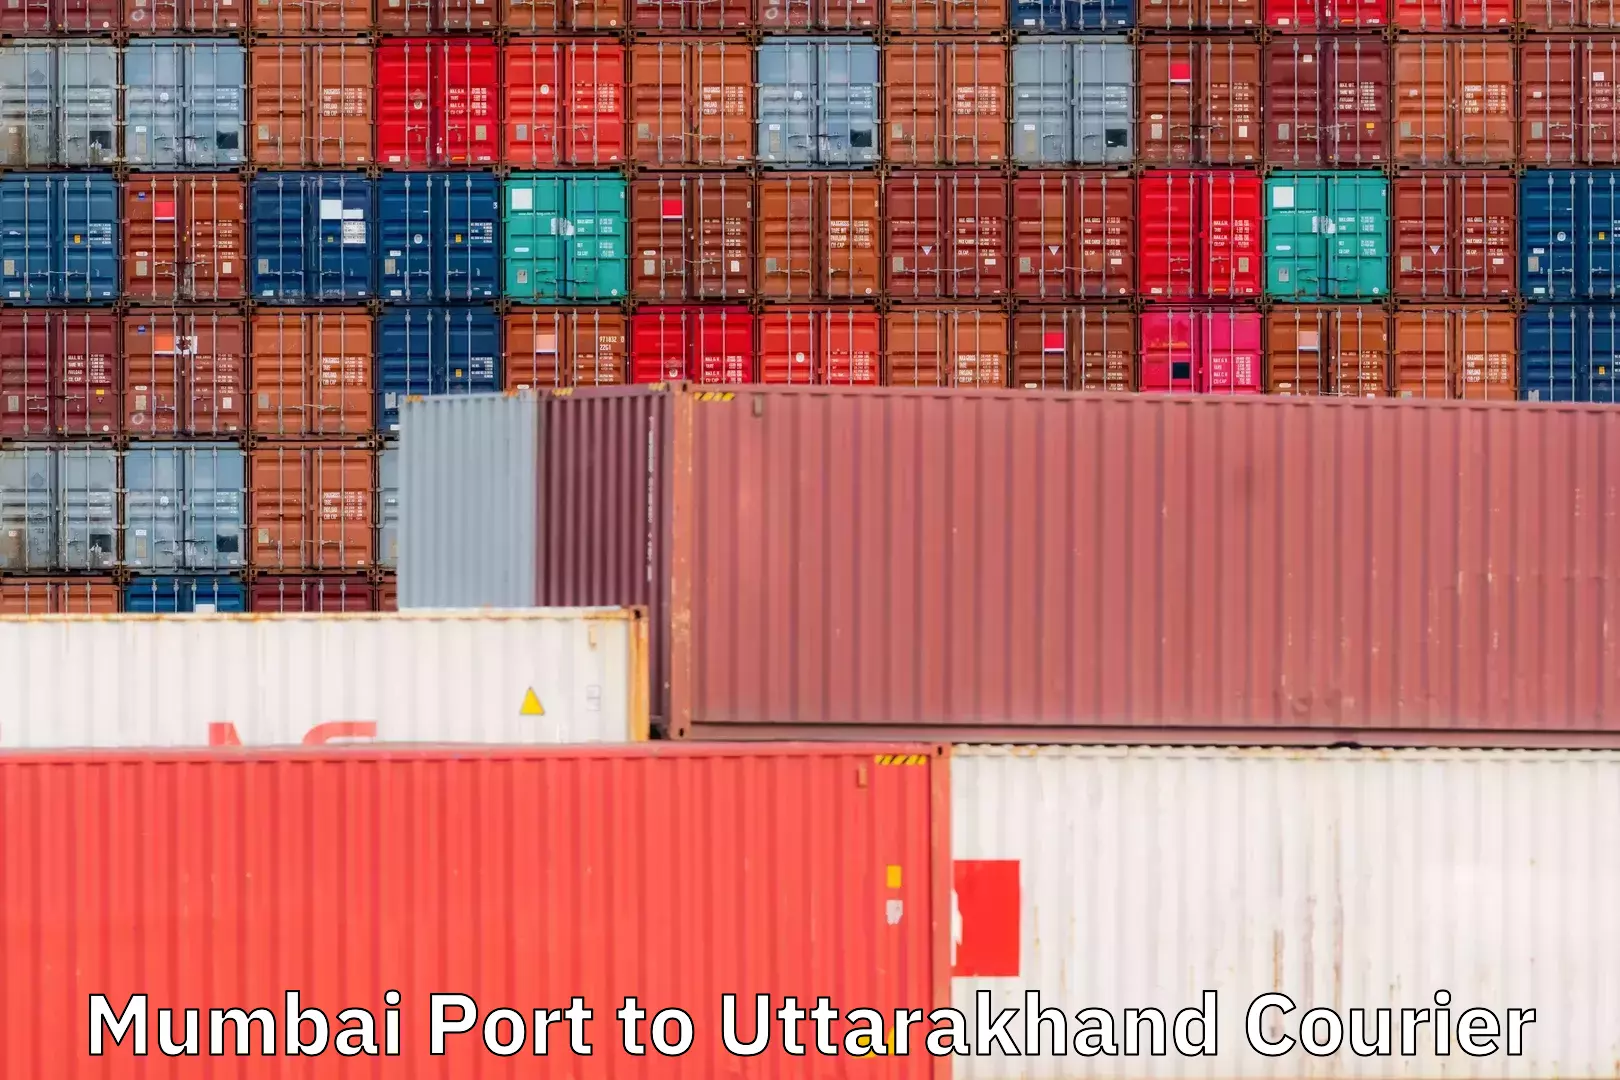 Weekend courier service Mumbai Port to Uttarakhand